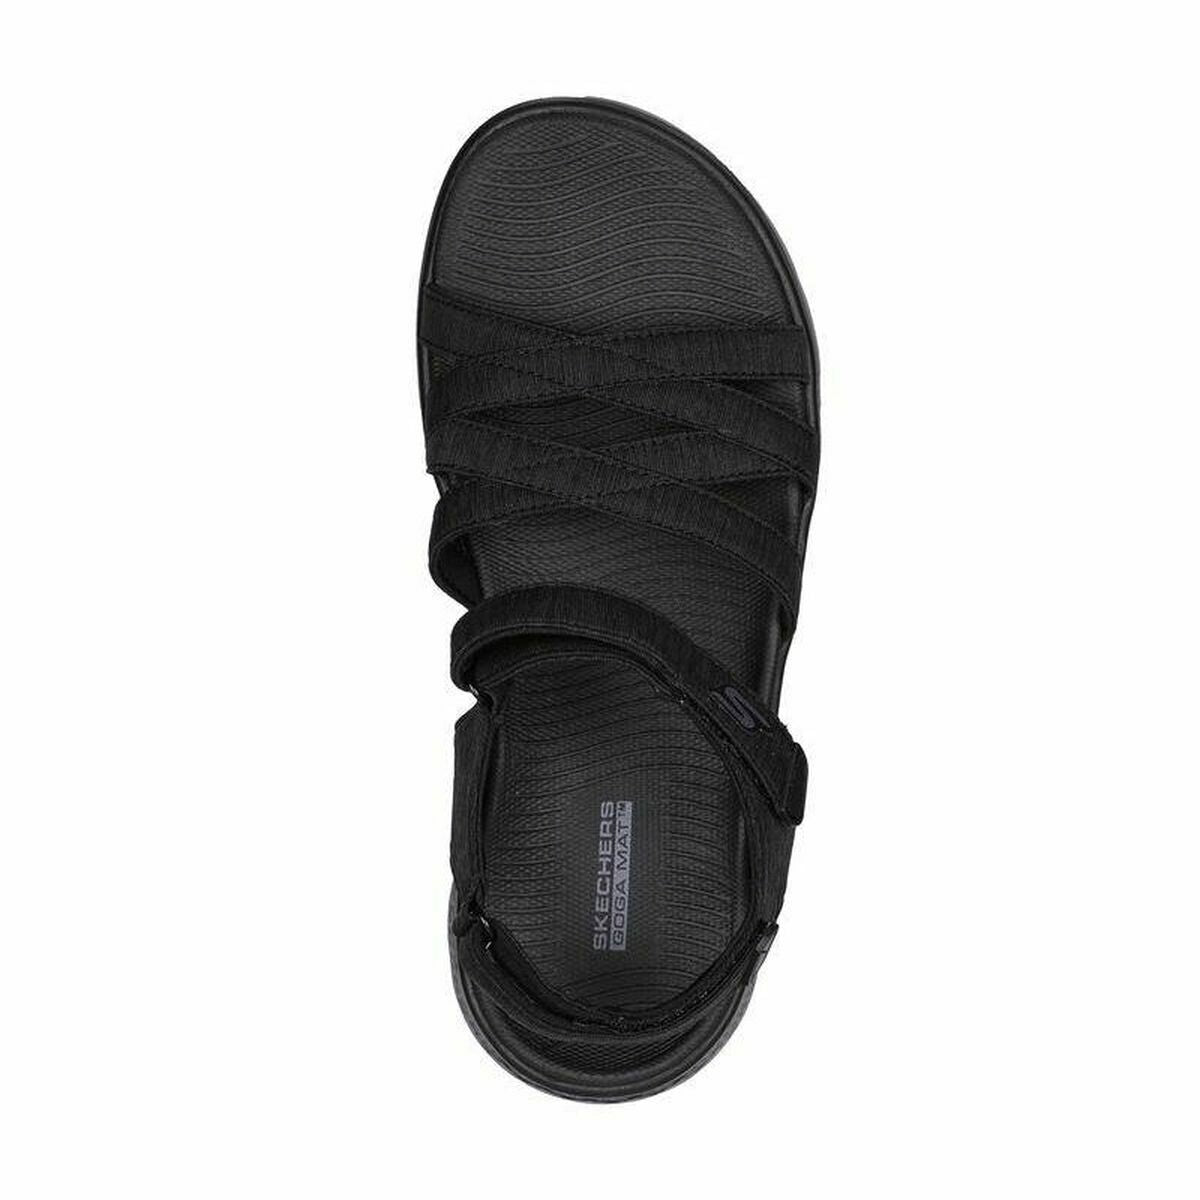 Mountain sandals Skechers Walk Flex Sunshine Black